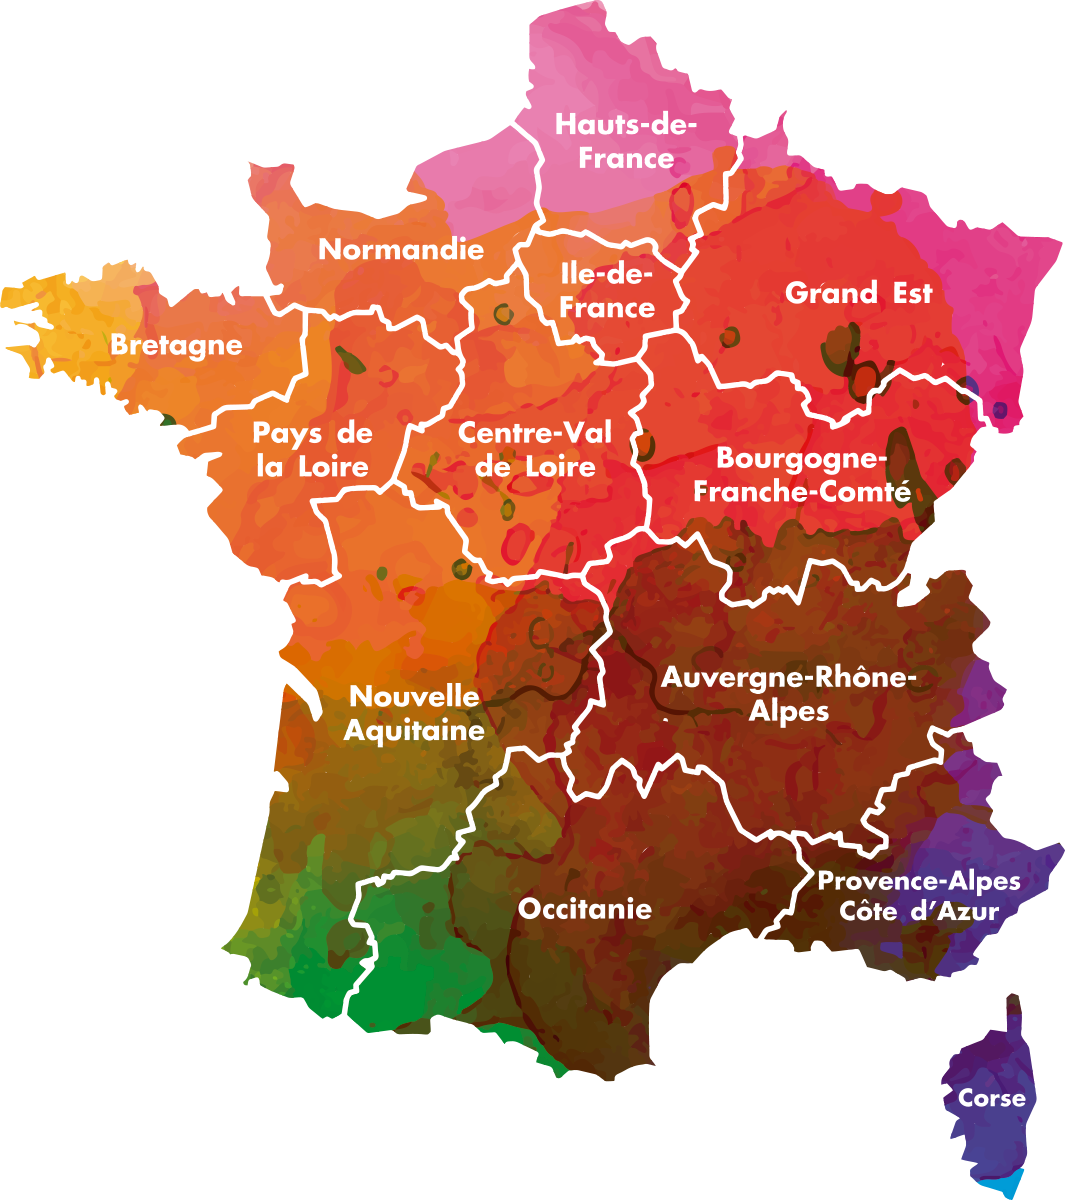 Carte de France Regions. La France Regions. Regions Francaises. Регионы Франции. Region de france